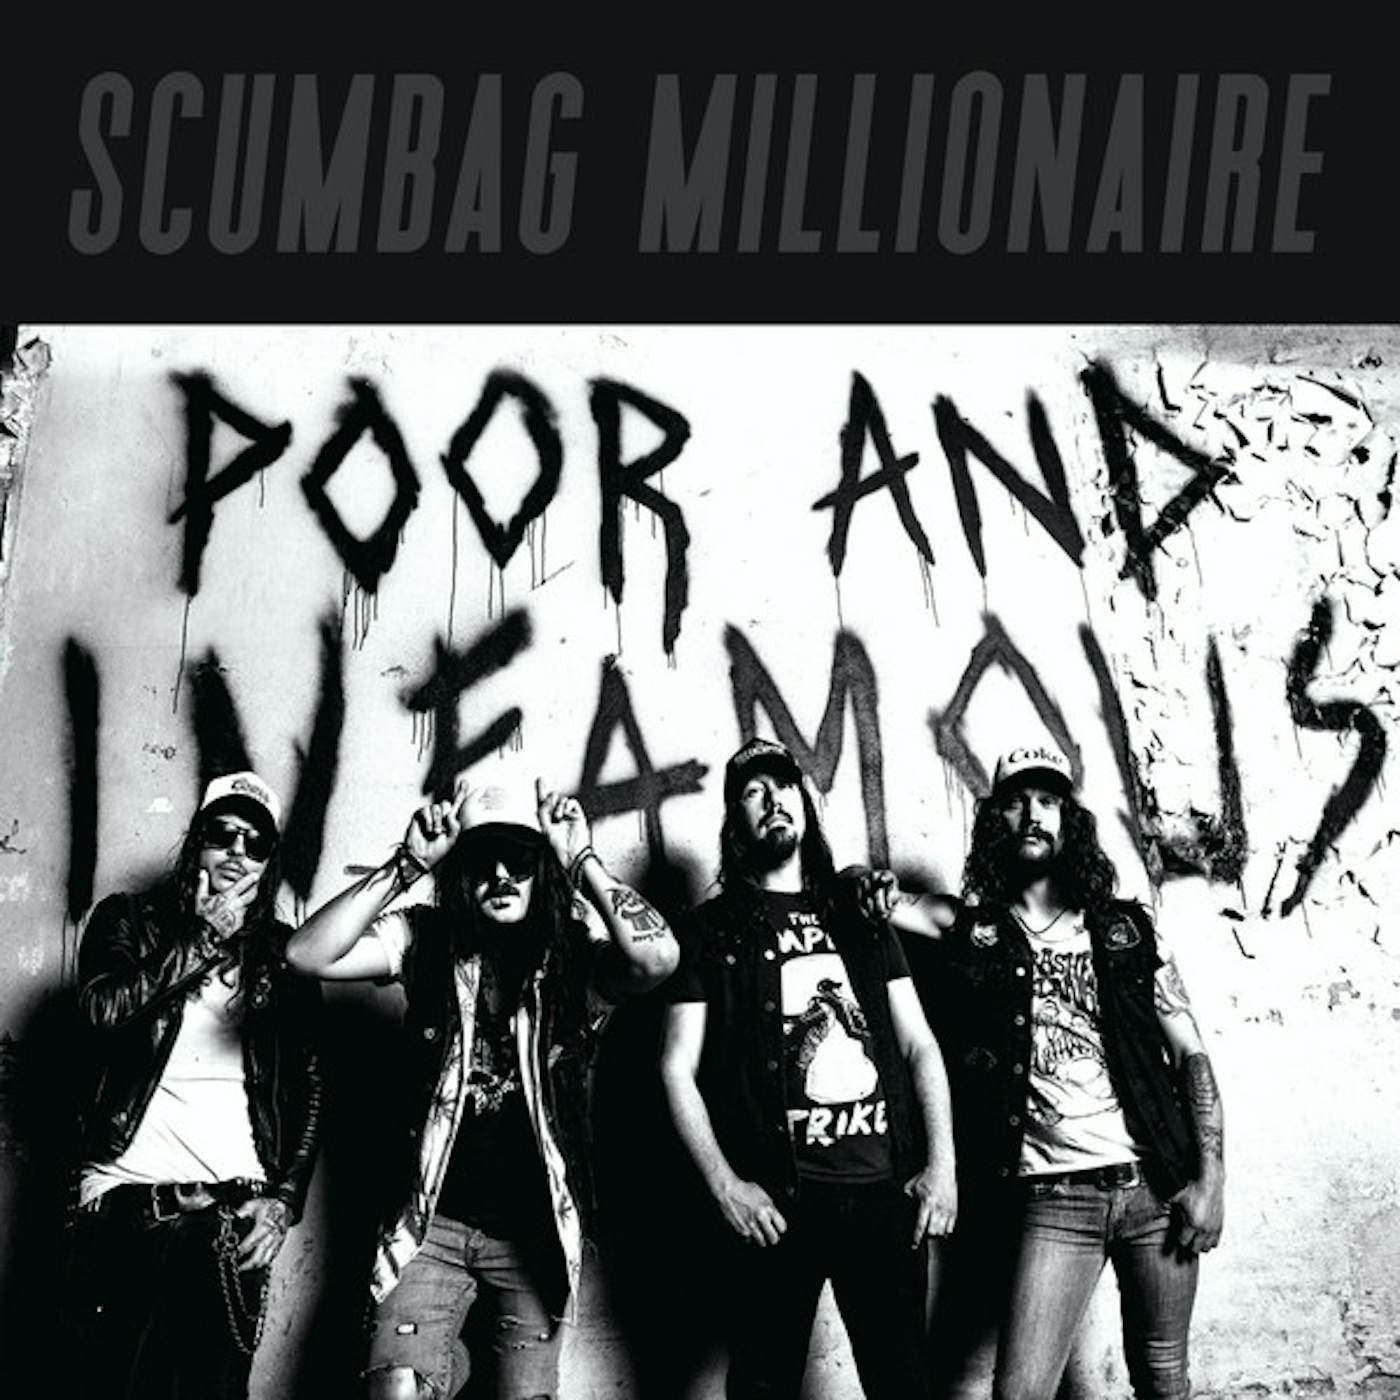 Scumbag Millionaire POOR & INFAMOUS (MAGENTA VINYL) Vinyl Record